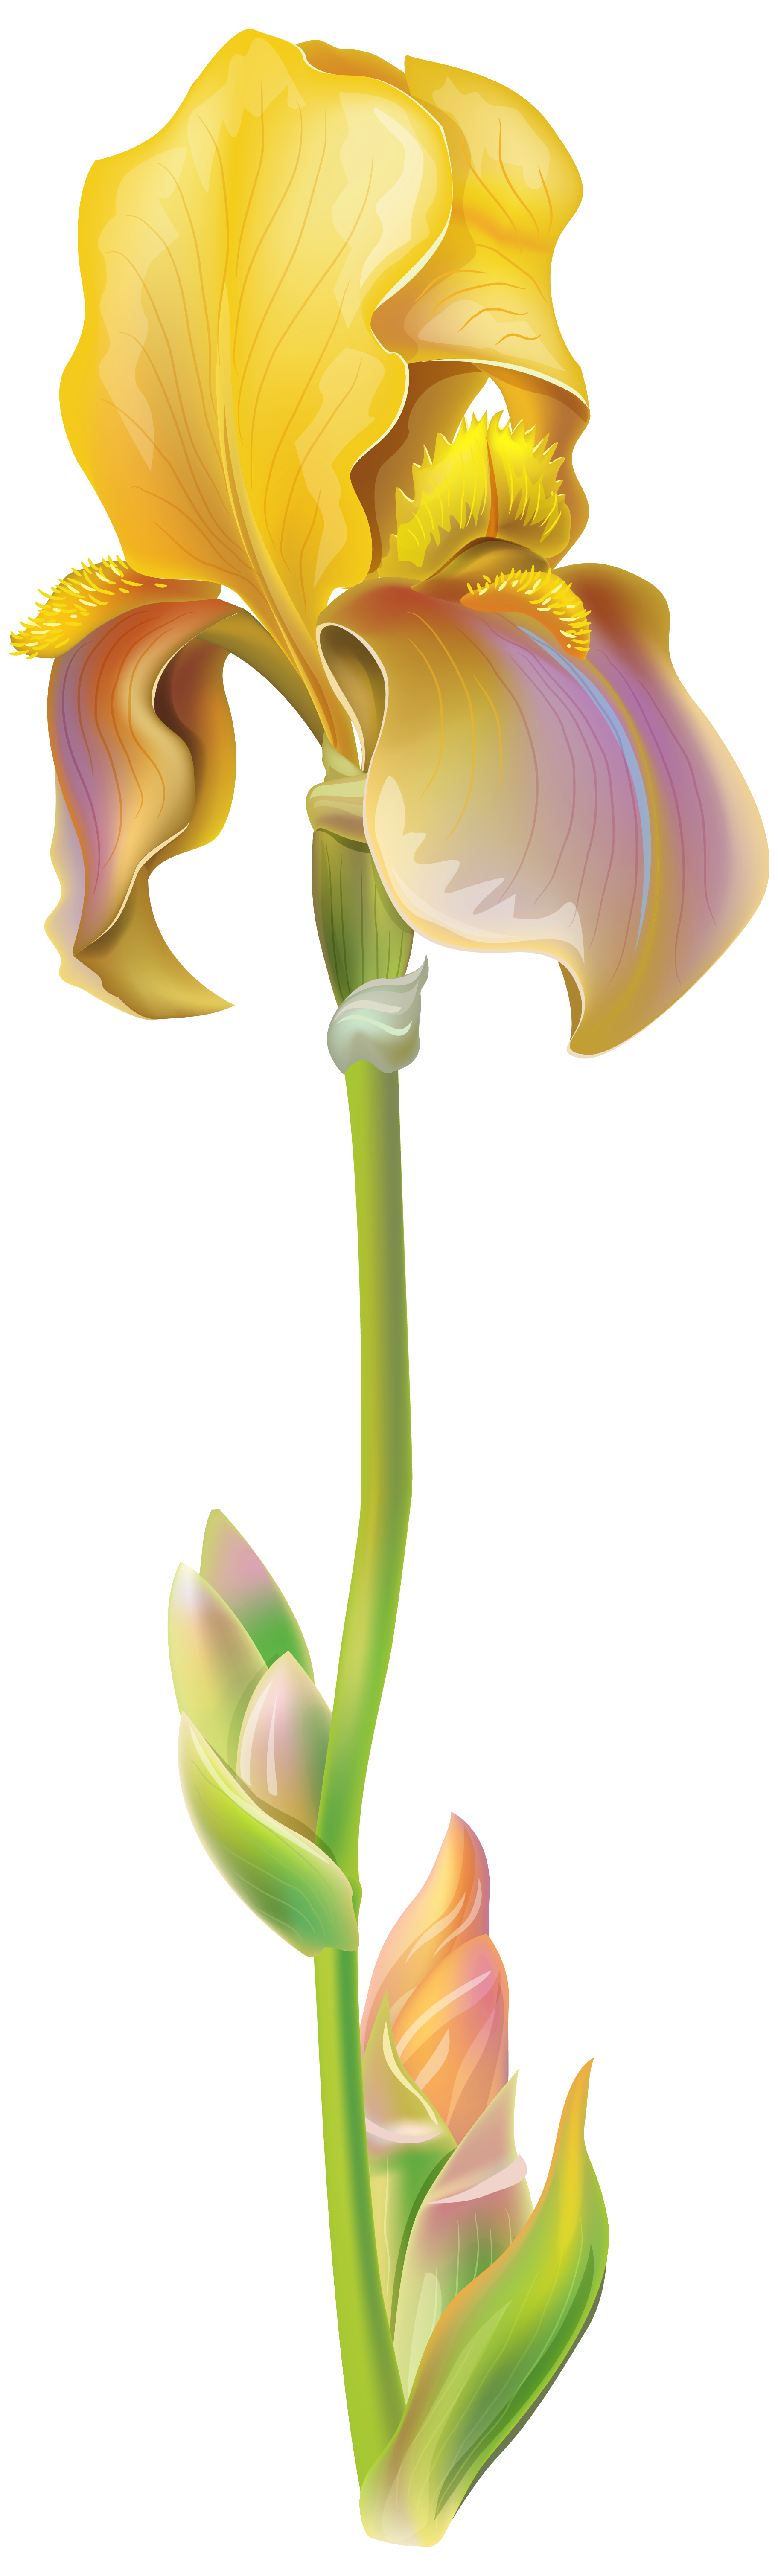 Purple Iris Flower PNG Clipart Image 